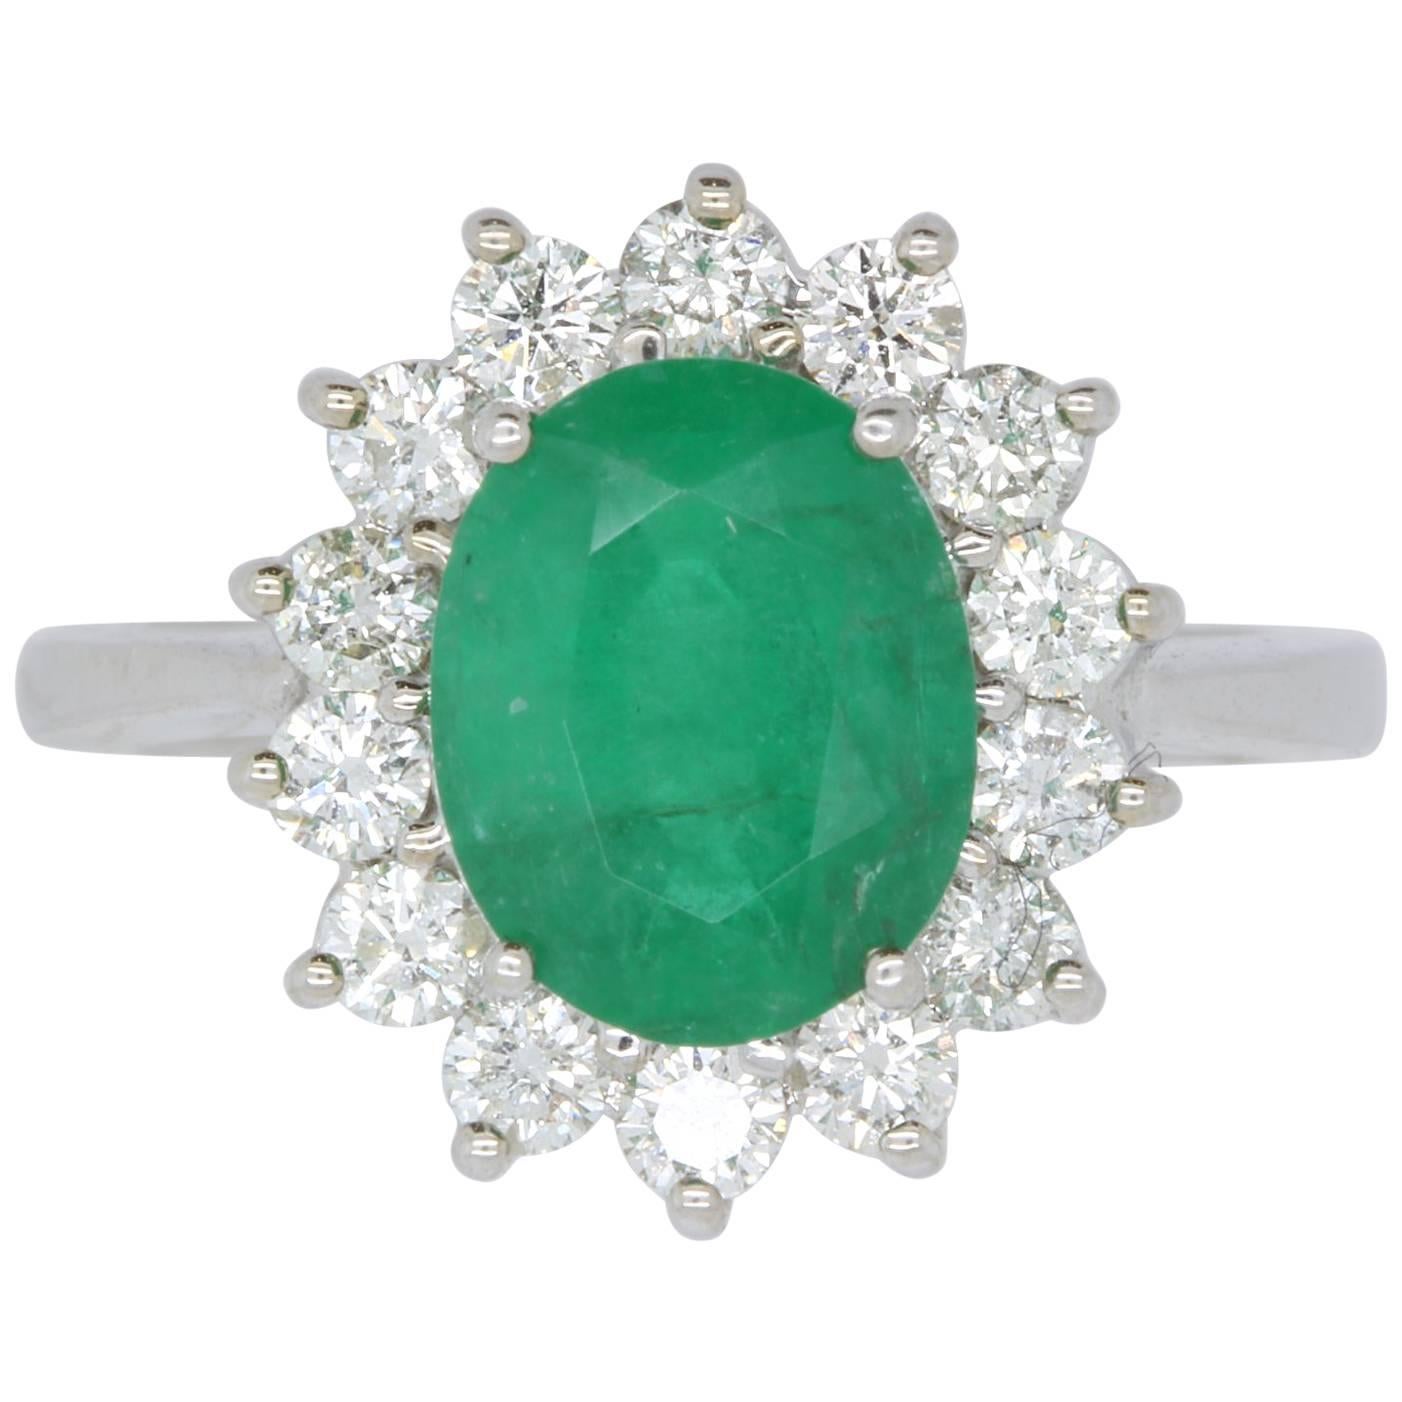 2.51 Carat Oval Emerald Halo Diamond Ring 